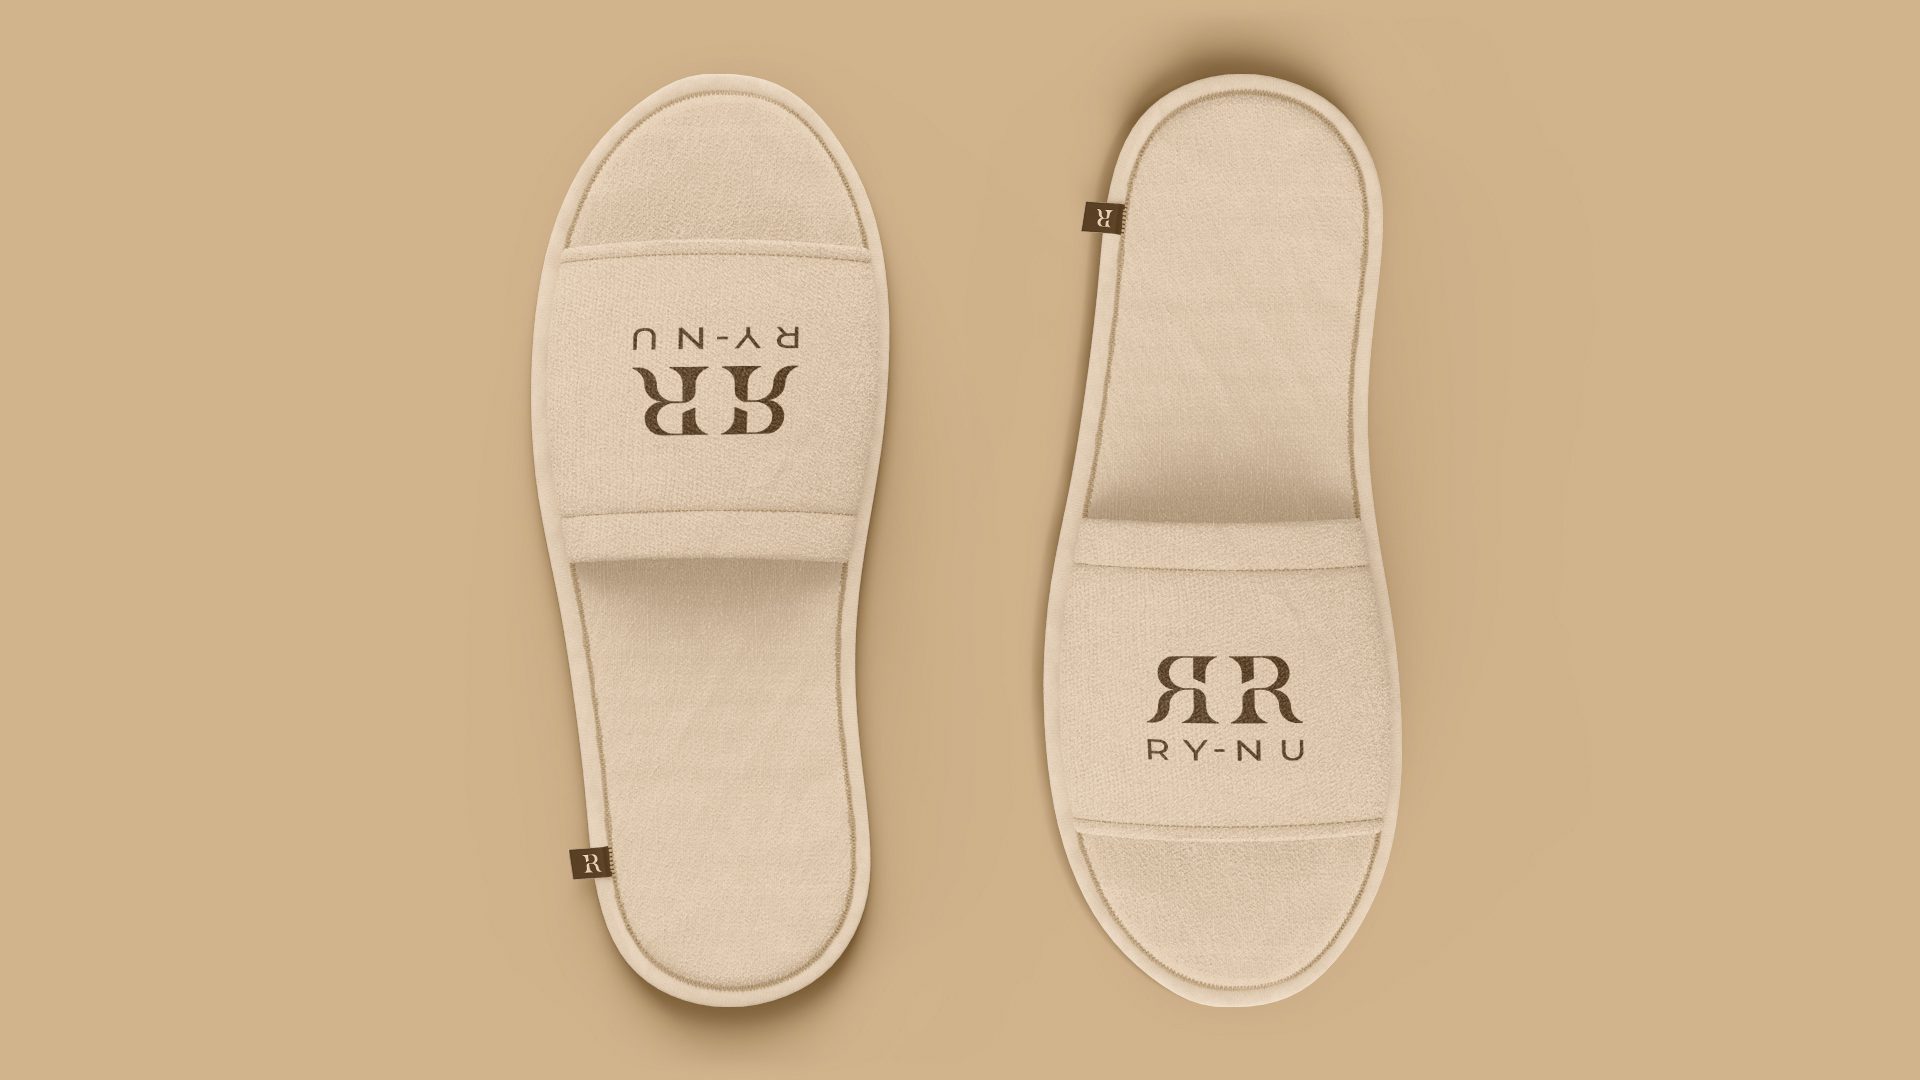 Luxury spa slipper mockup design